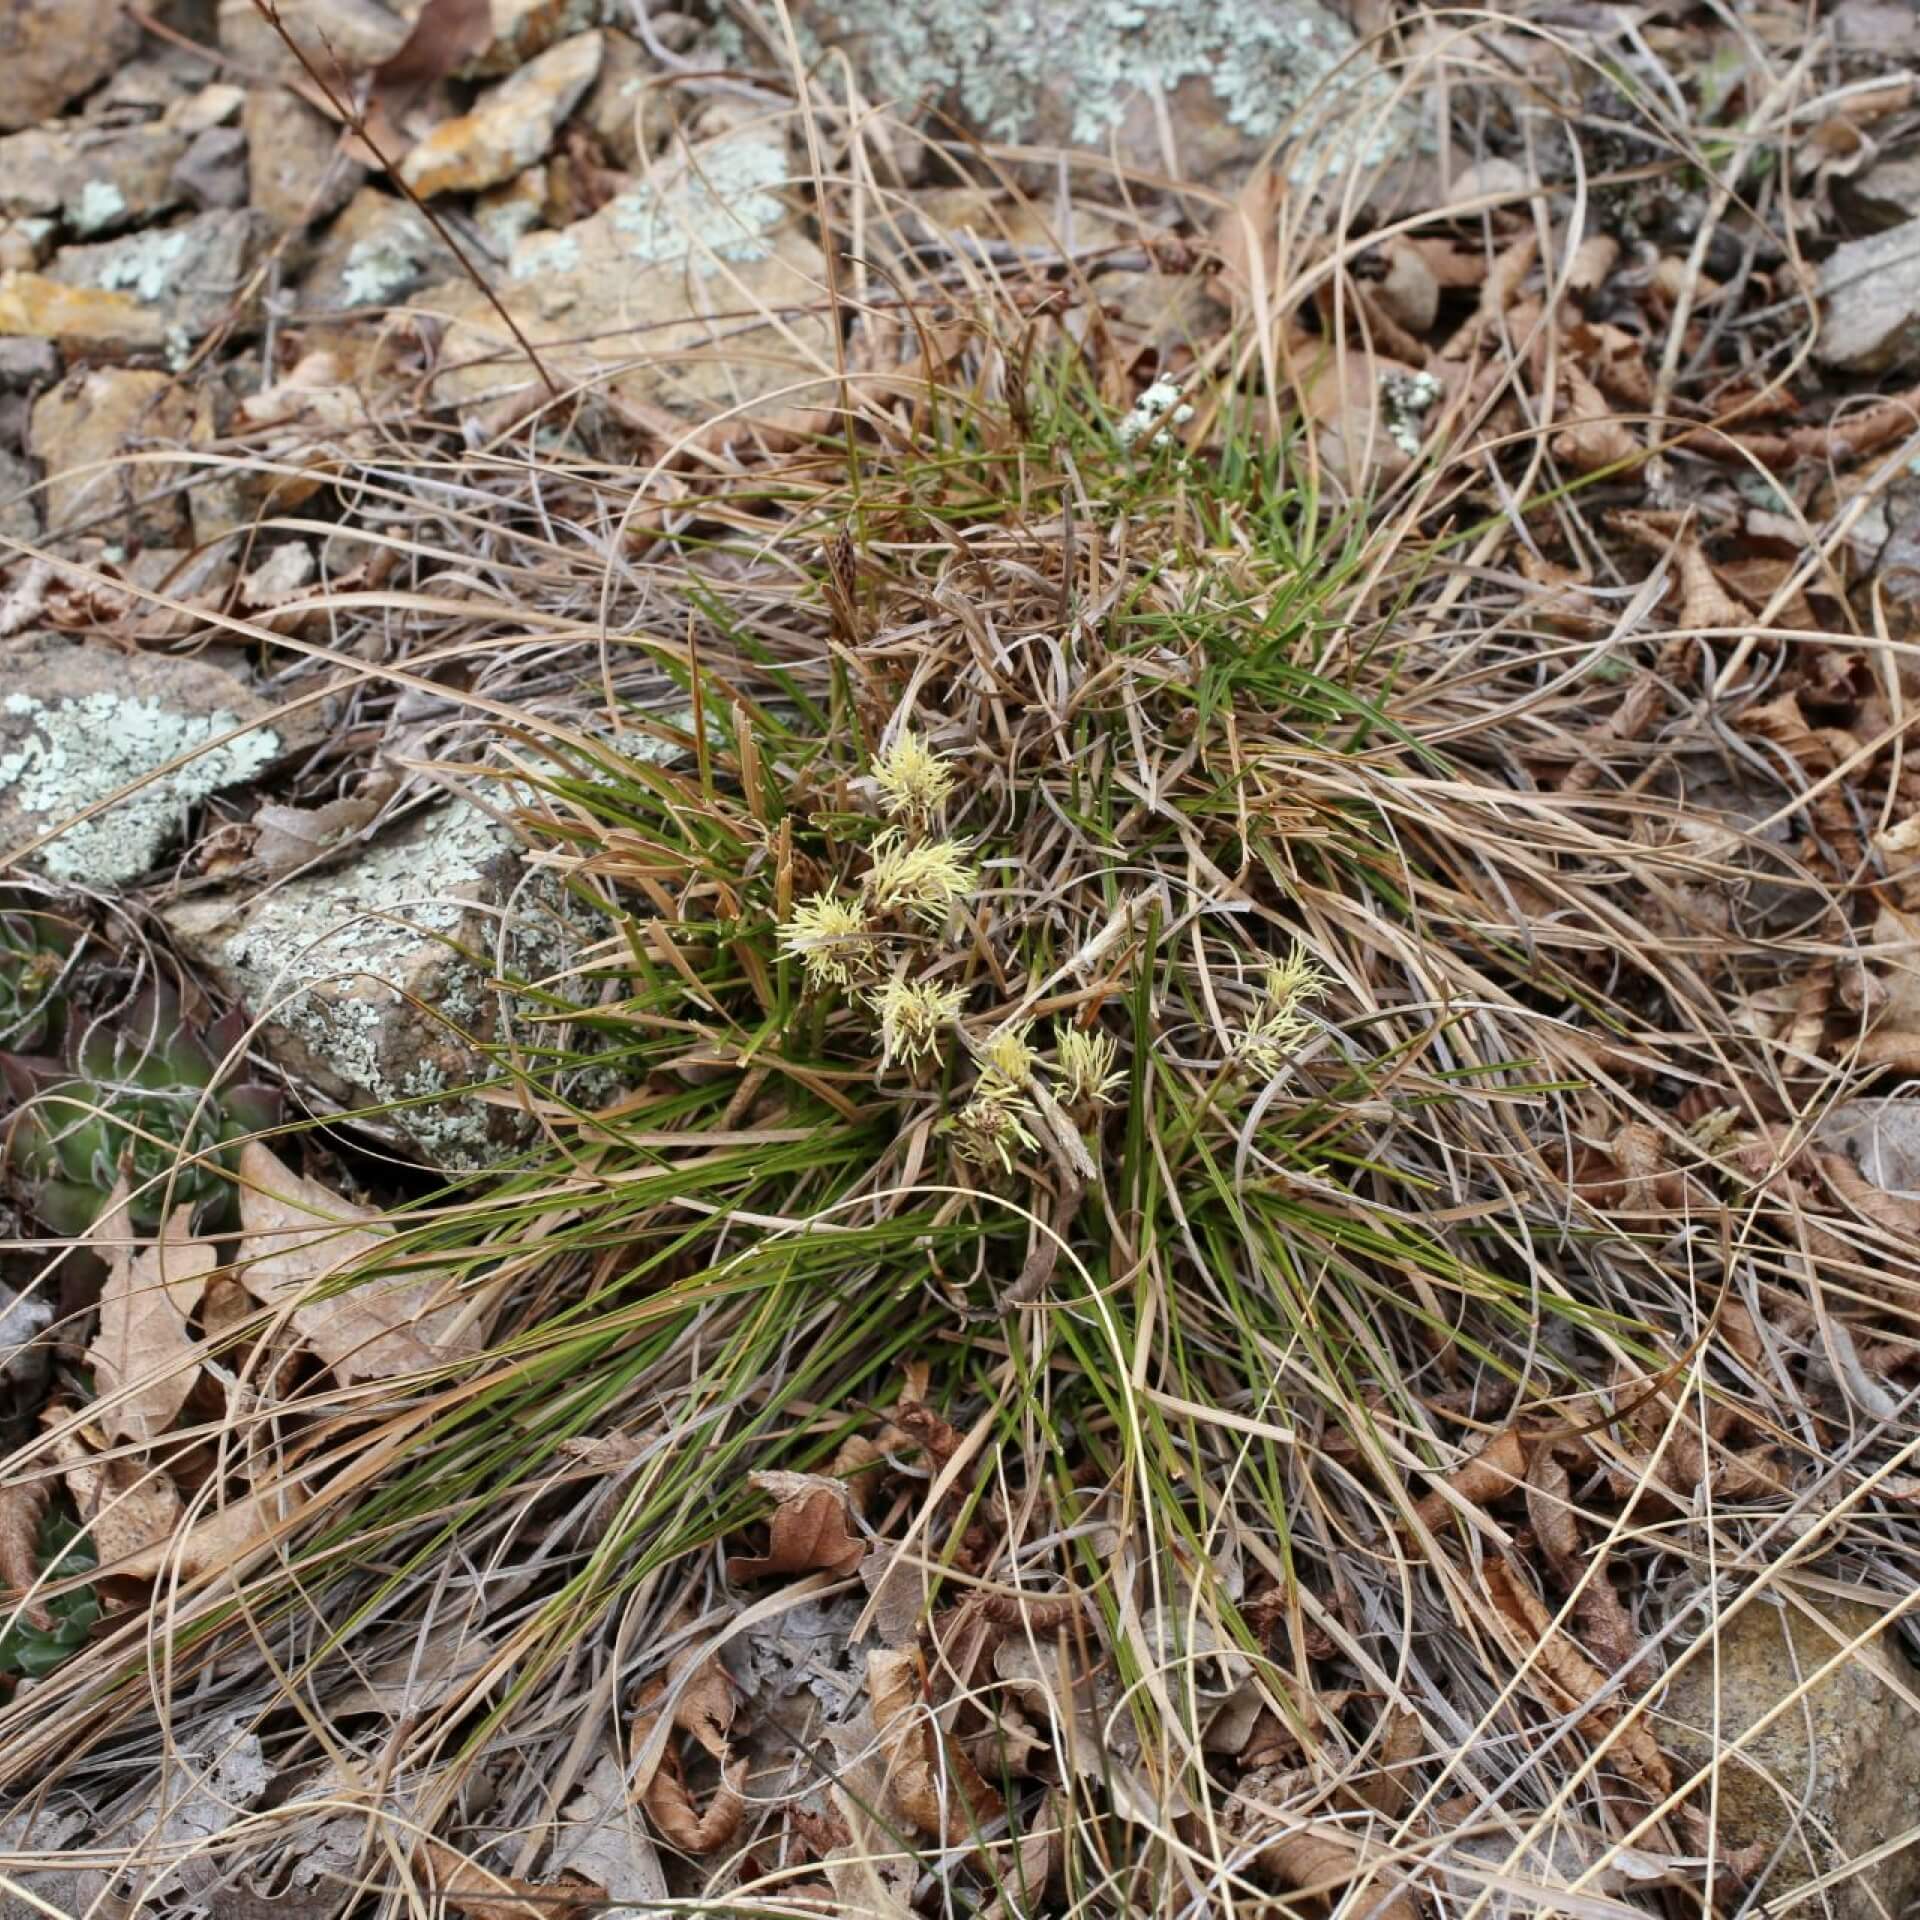 Erd-Segge (Carex humilis)